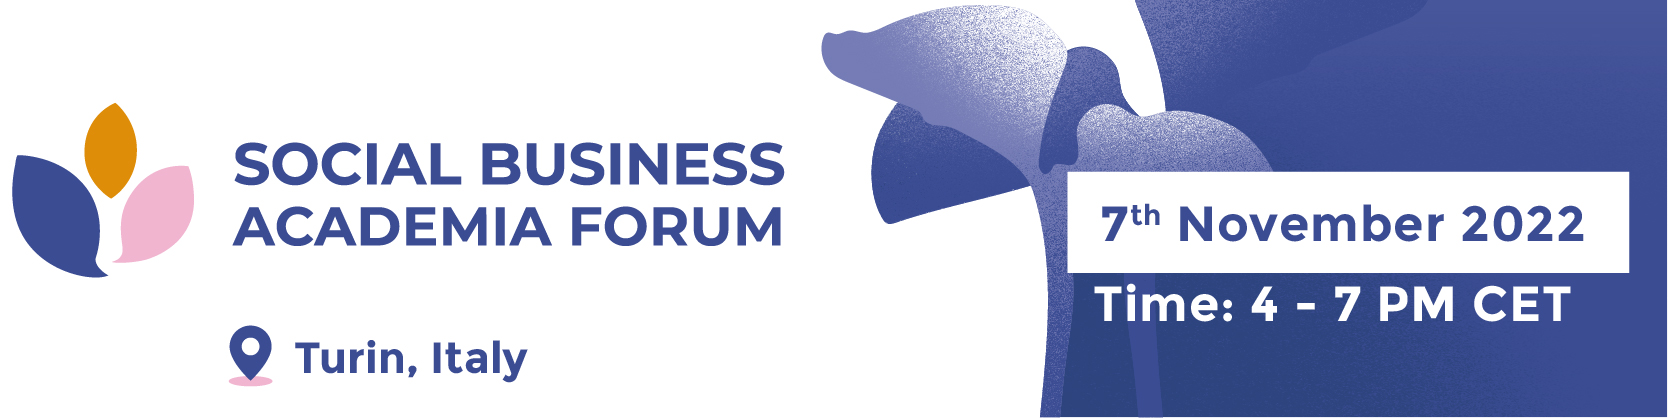 Social Business Academia Forum (SBAF)